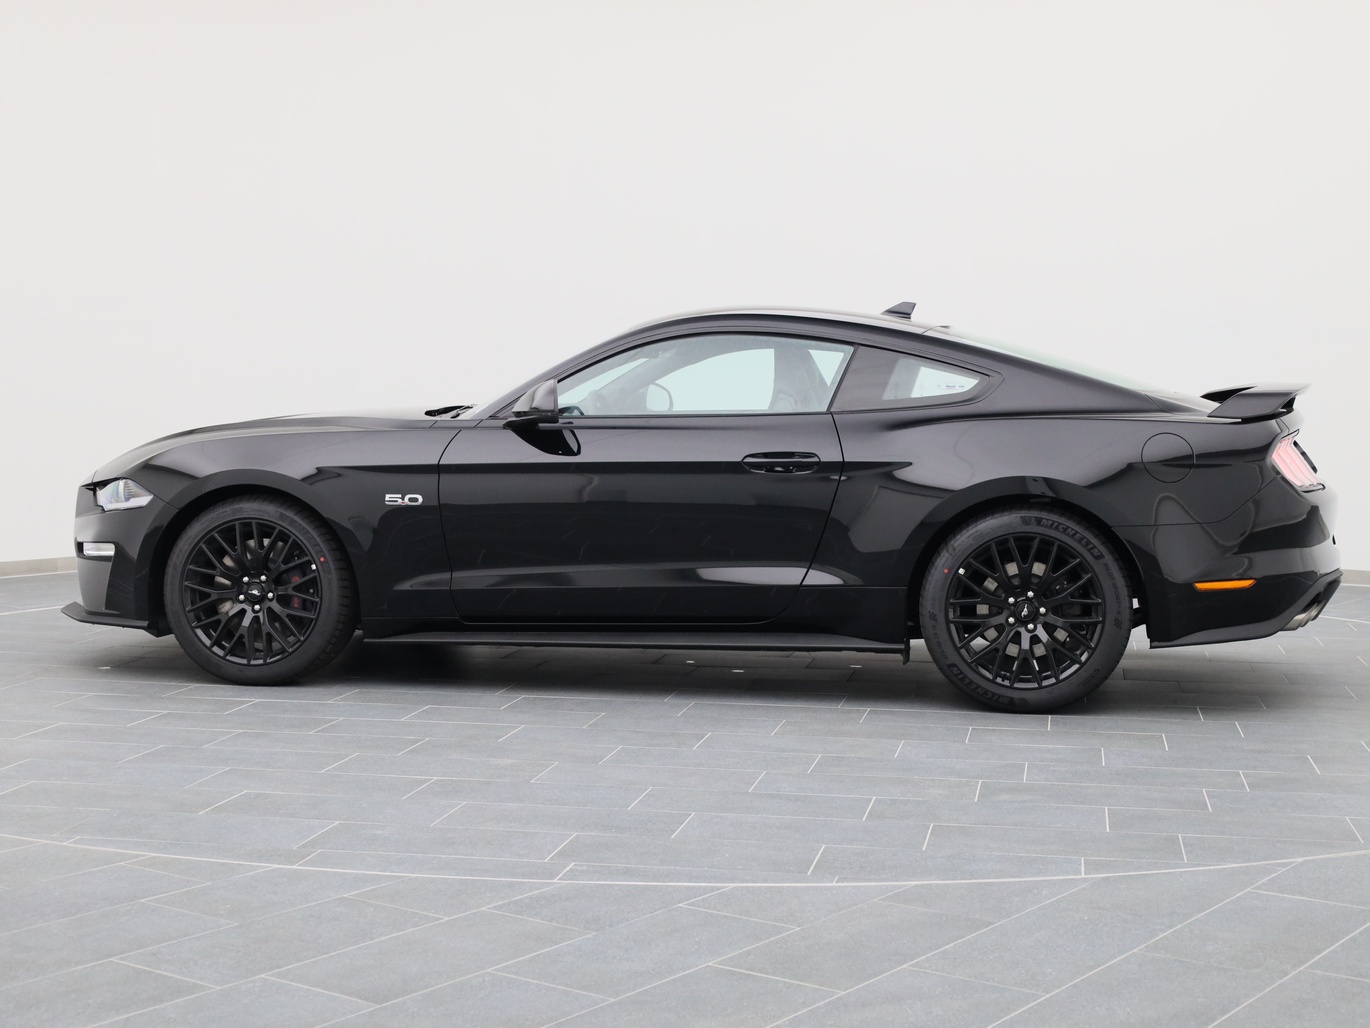  Ford Mustang GT Coupé V8 450PS / Premium 2 / Magne in Iridium Schwarz von Links